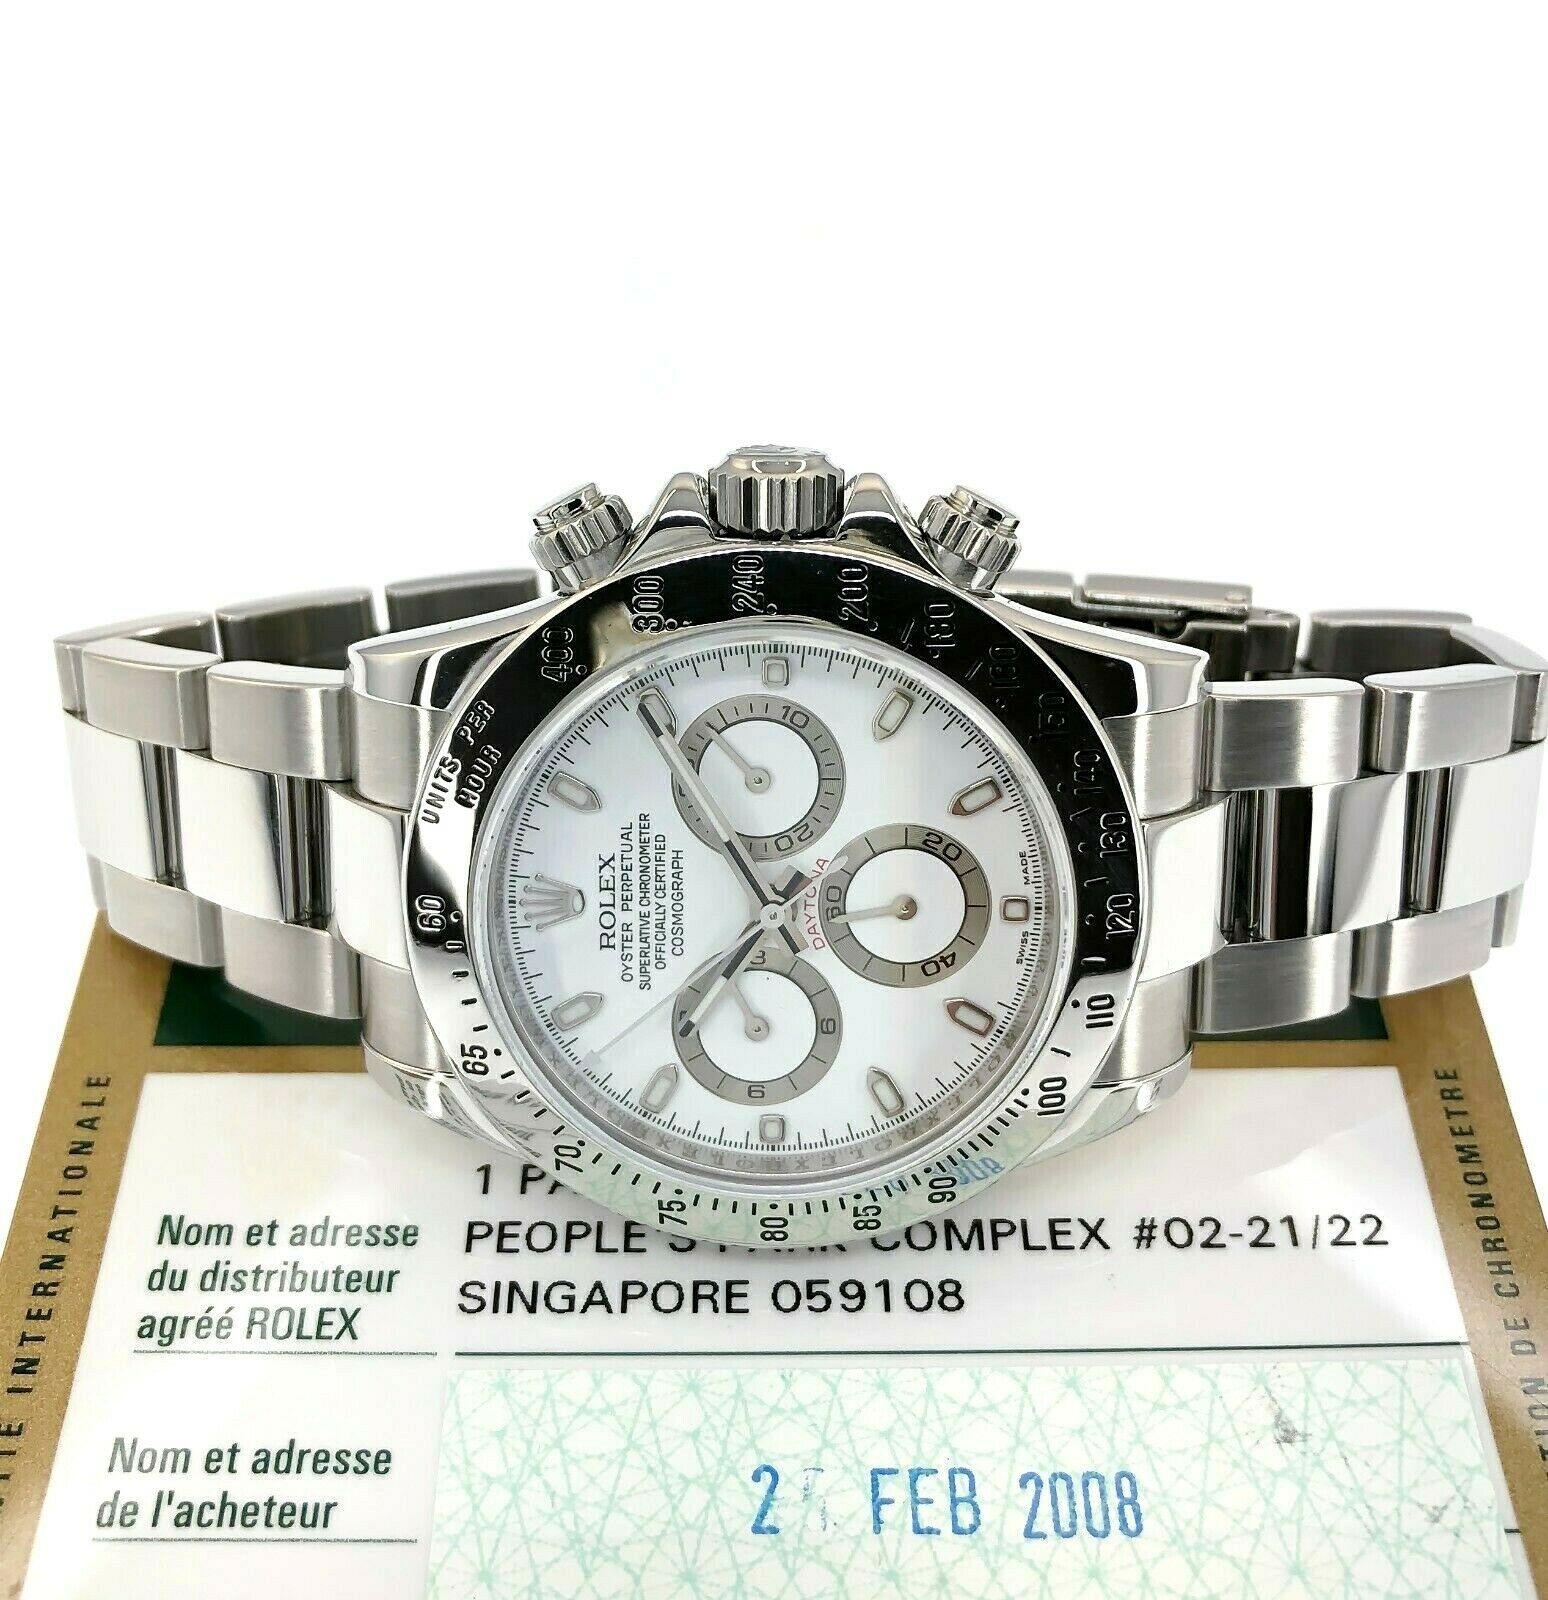 Prominent Watch :: Rolex Bamford Watch Dept Daytona 116520 Steel DLC Custom